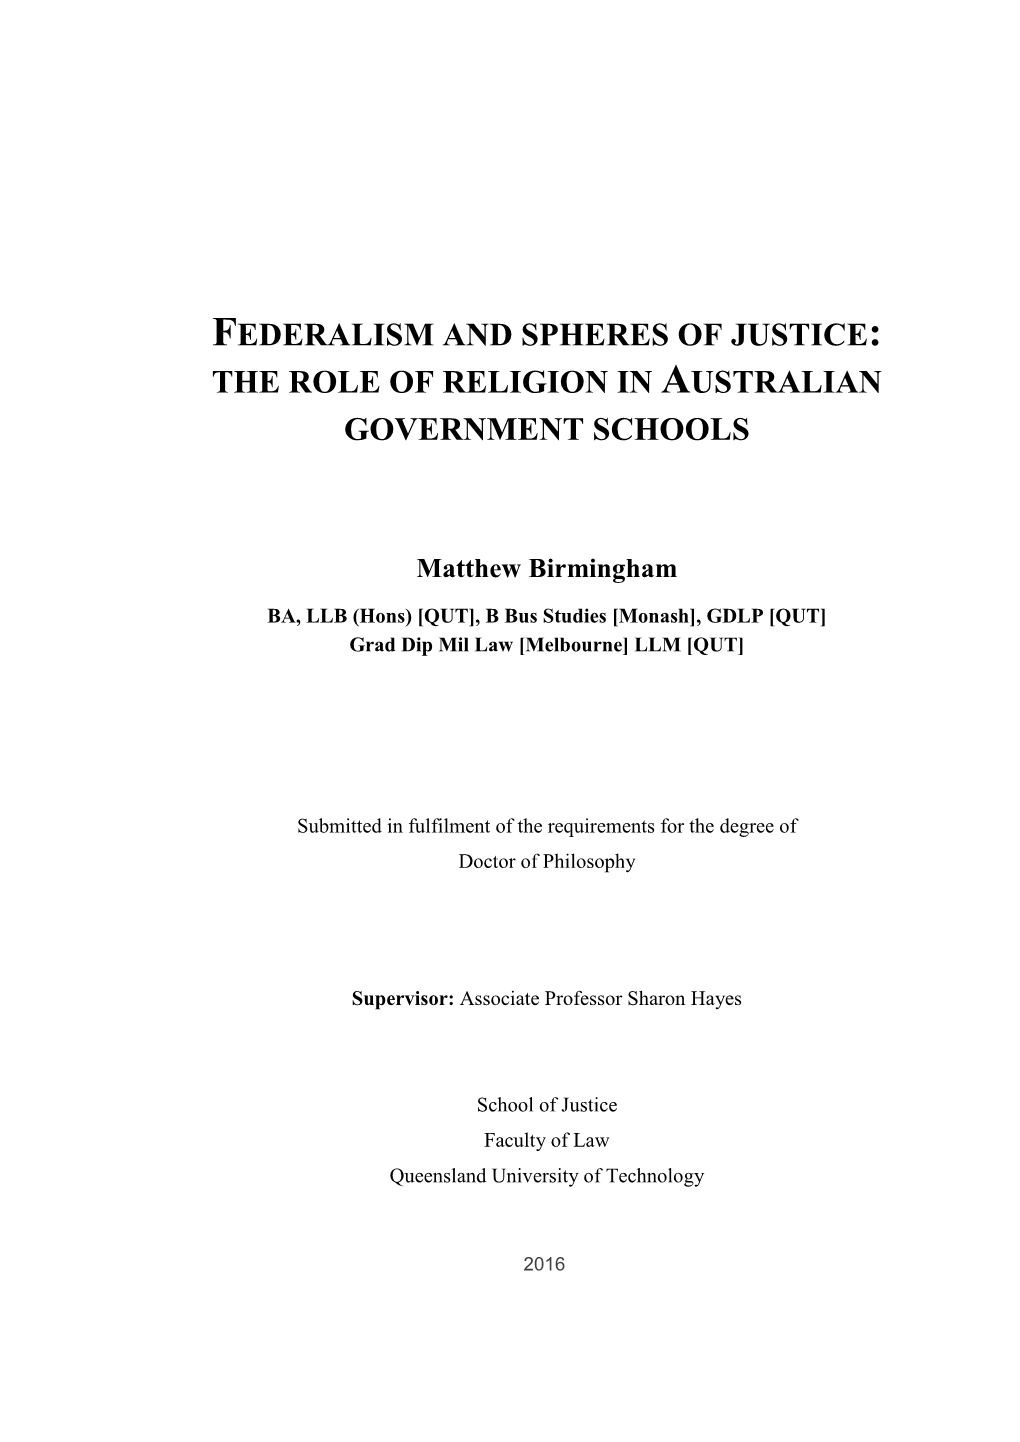 The Role of Religion in Australian Government Schools